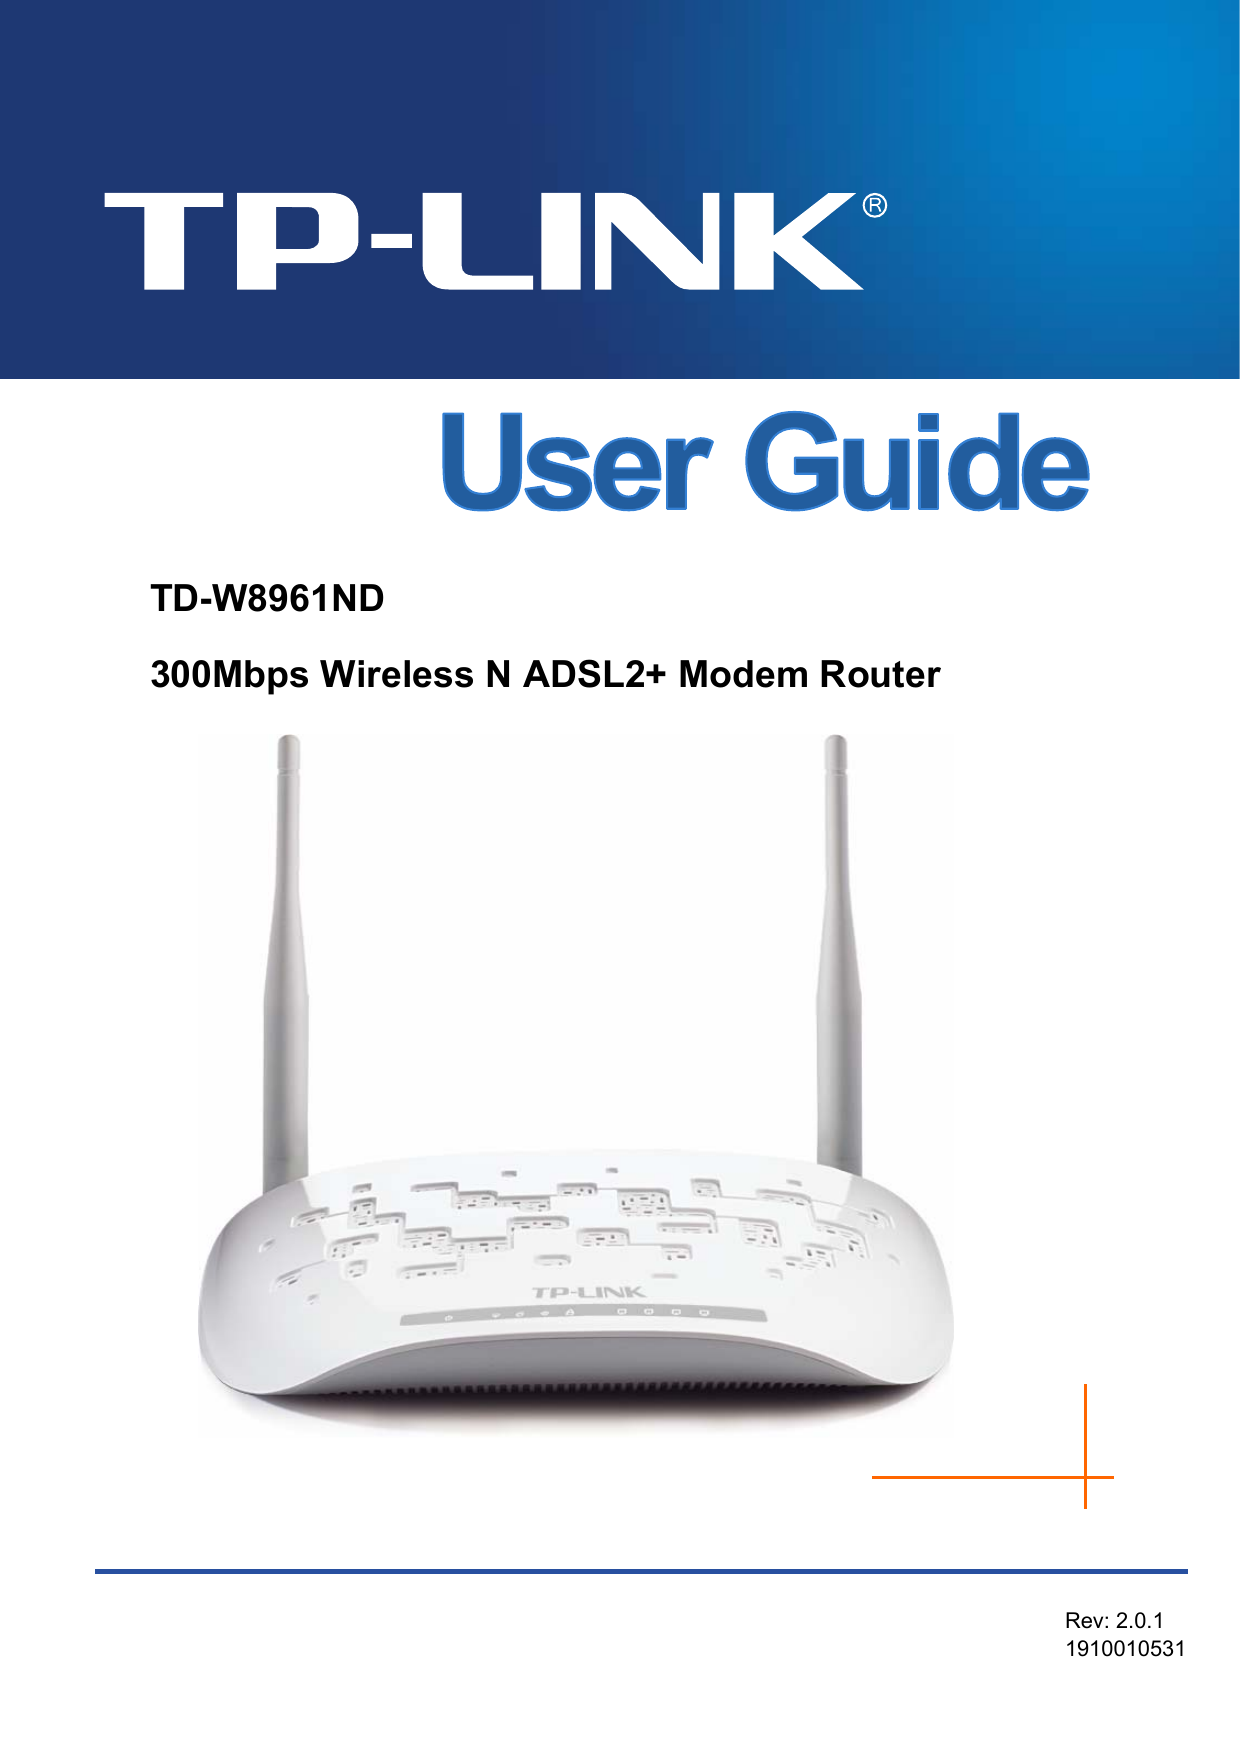   TD-W8961ND 300Mbps Wireless N ADSL2+ Modem Router  Rev: 2.0.1 1910010531 